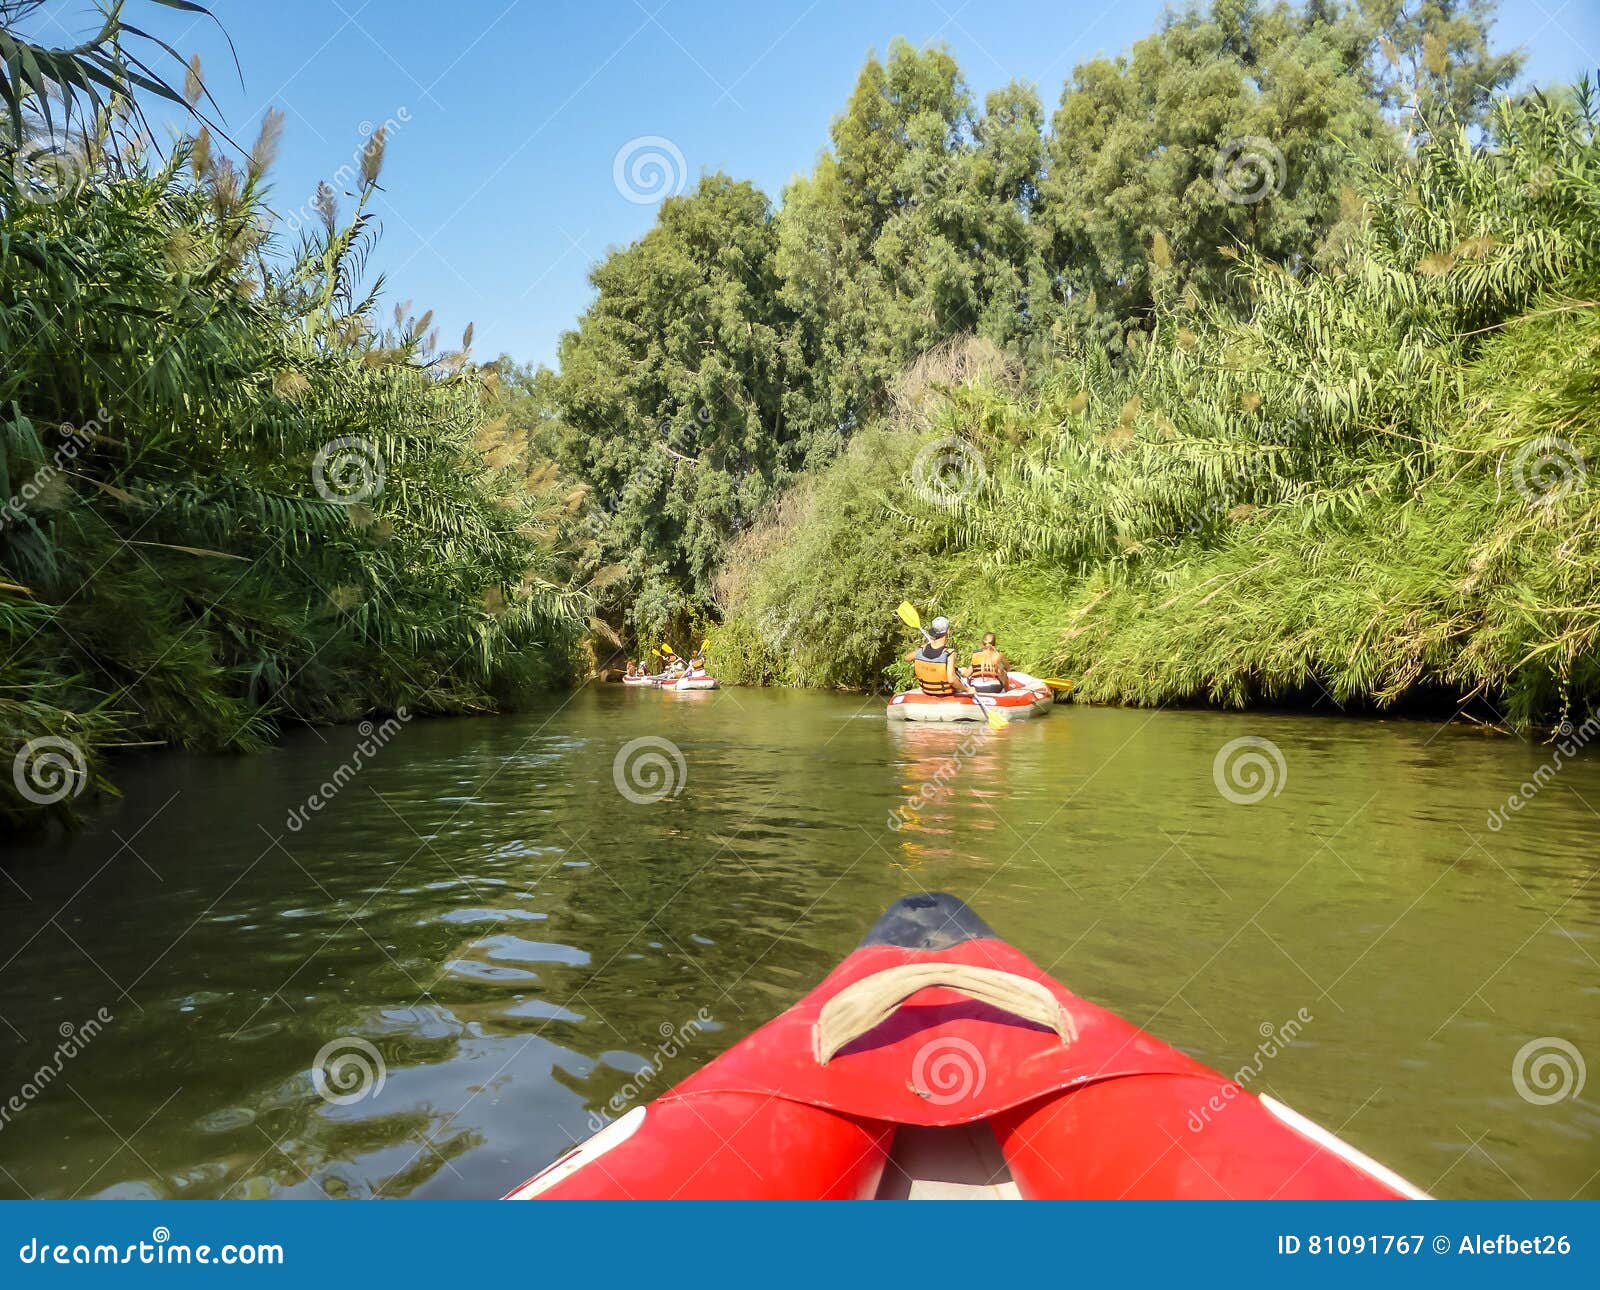 Jordan River Rafting Photos - & Royalty-Free Stock Photos from Dreamstime